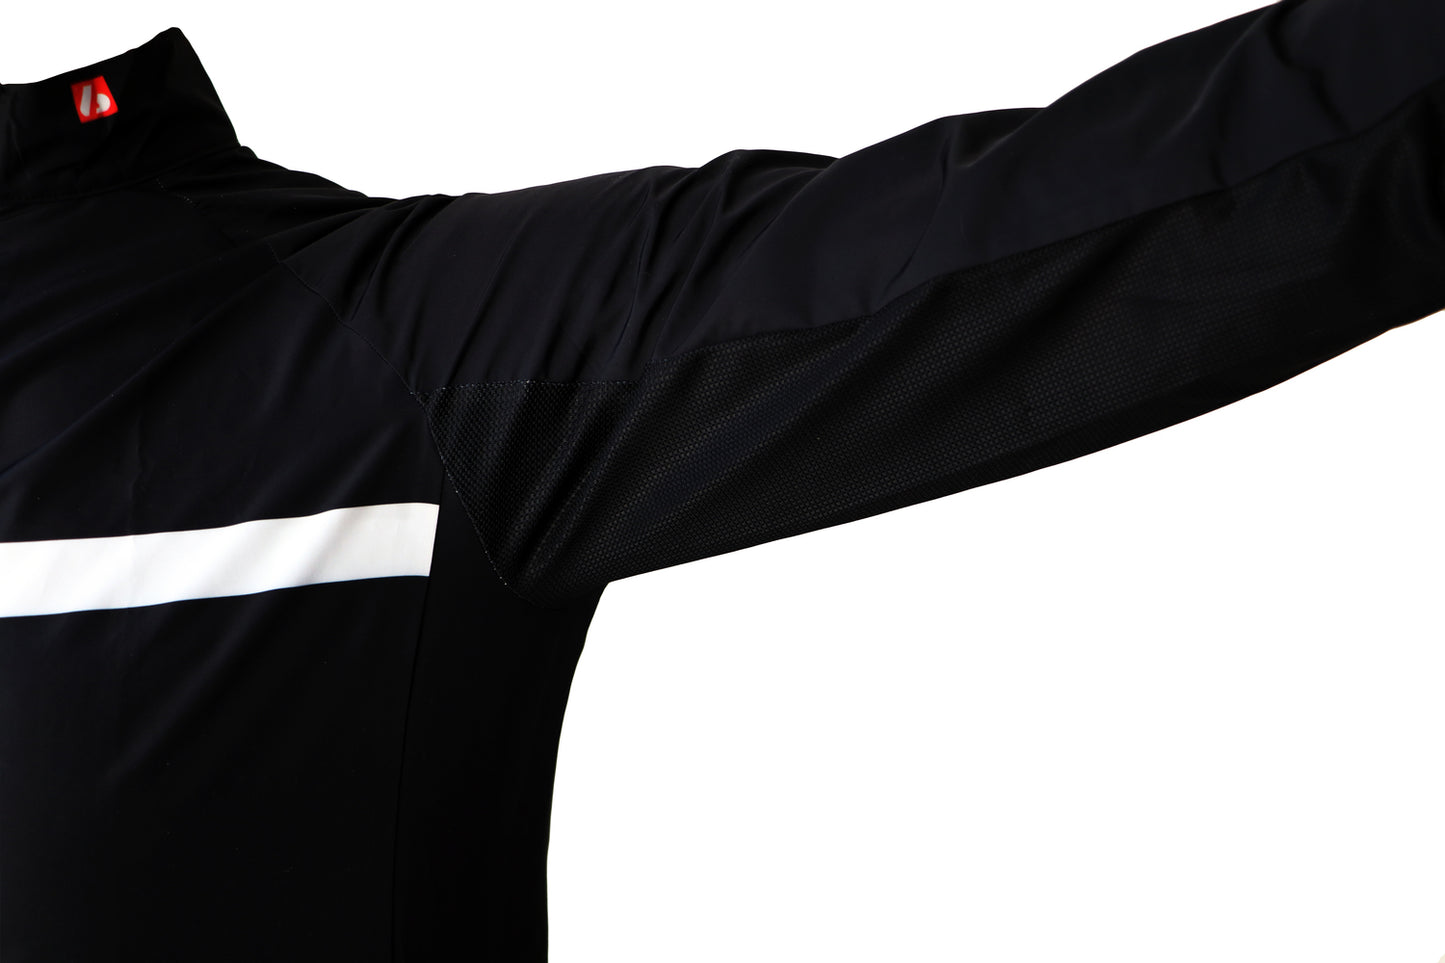 Bike textile - Long sleeved jacket, black and white windbreaker